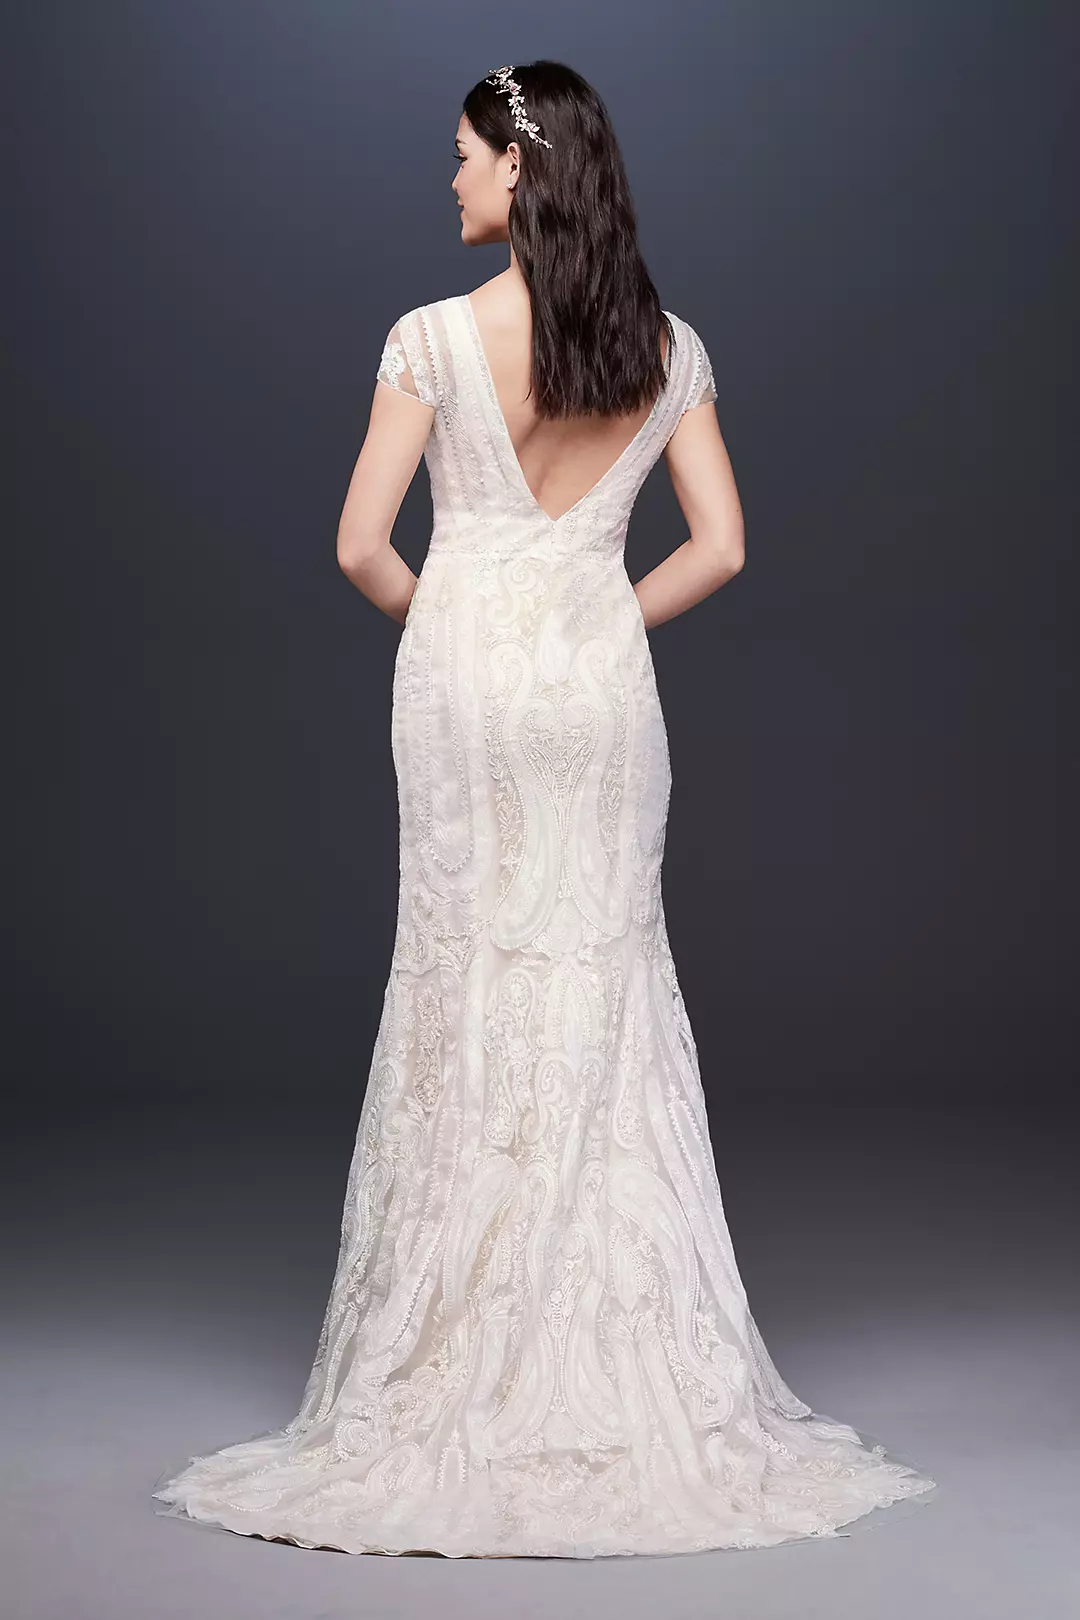 As-Is Laser-Cut Illusion Cap Sleeve Wedding Dress Image 2